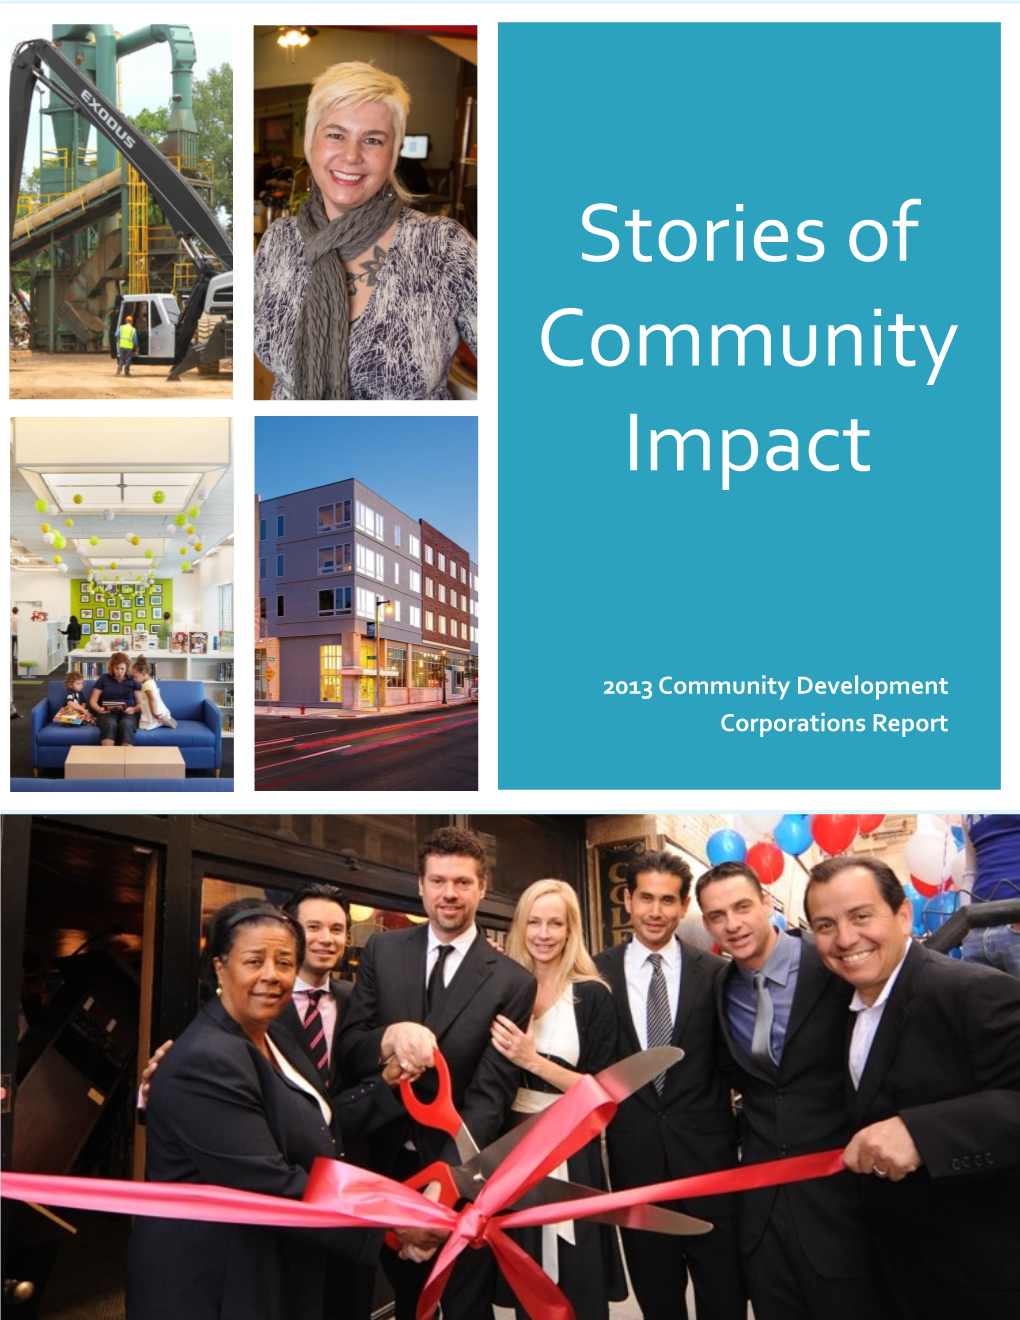 2013 Community Development Corporations Report